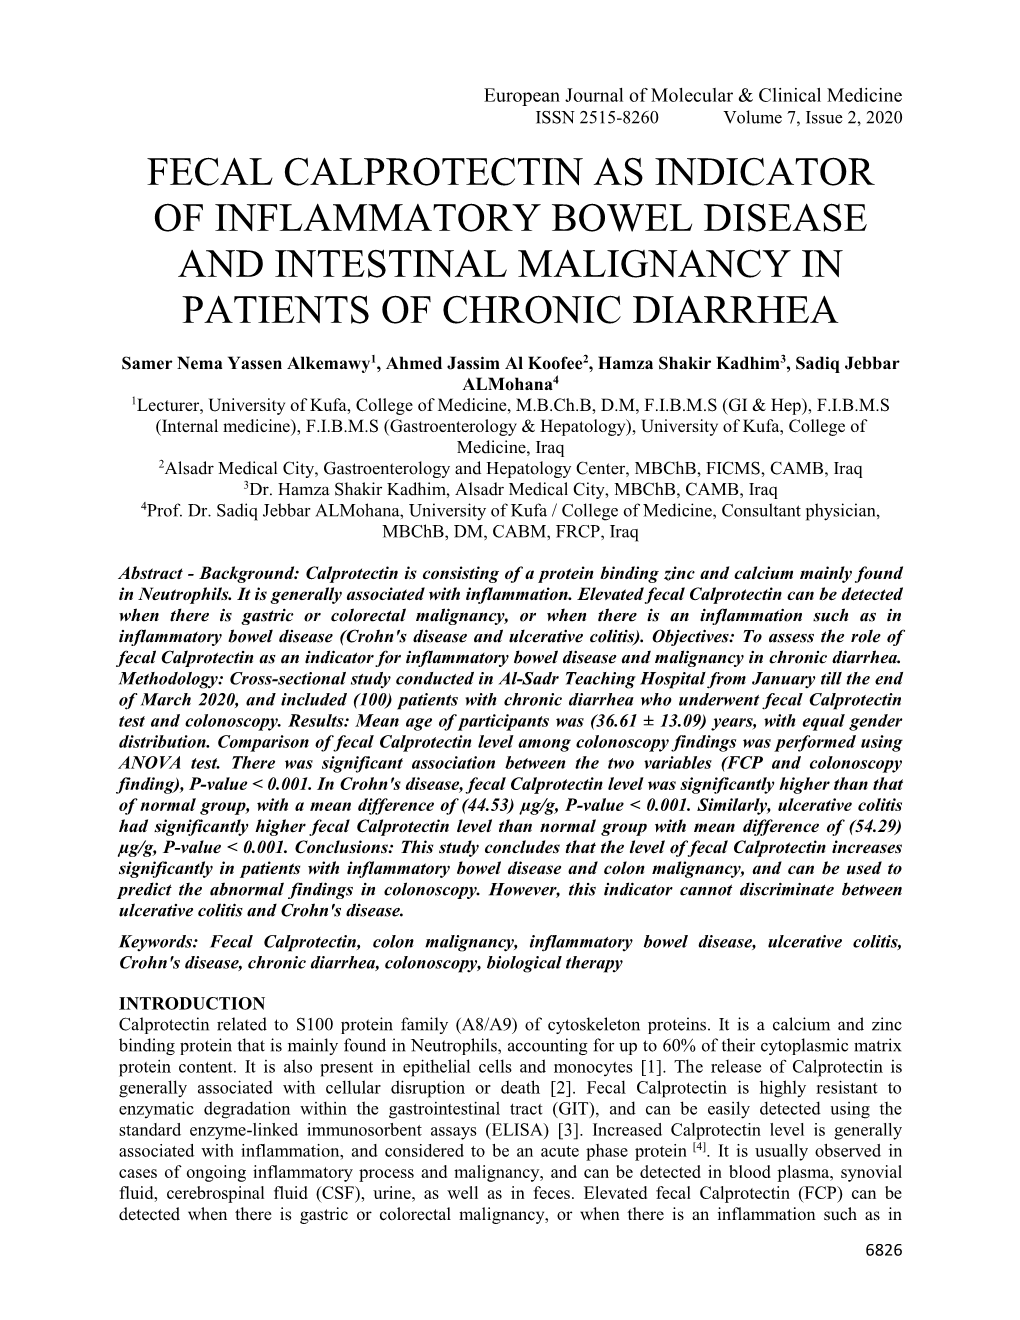 Fecal Calprotectin As Indicator of Inflammatory Bowel Disease and Intestinal Malignancy in Patients of Chronic Diarrhea